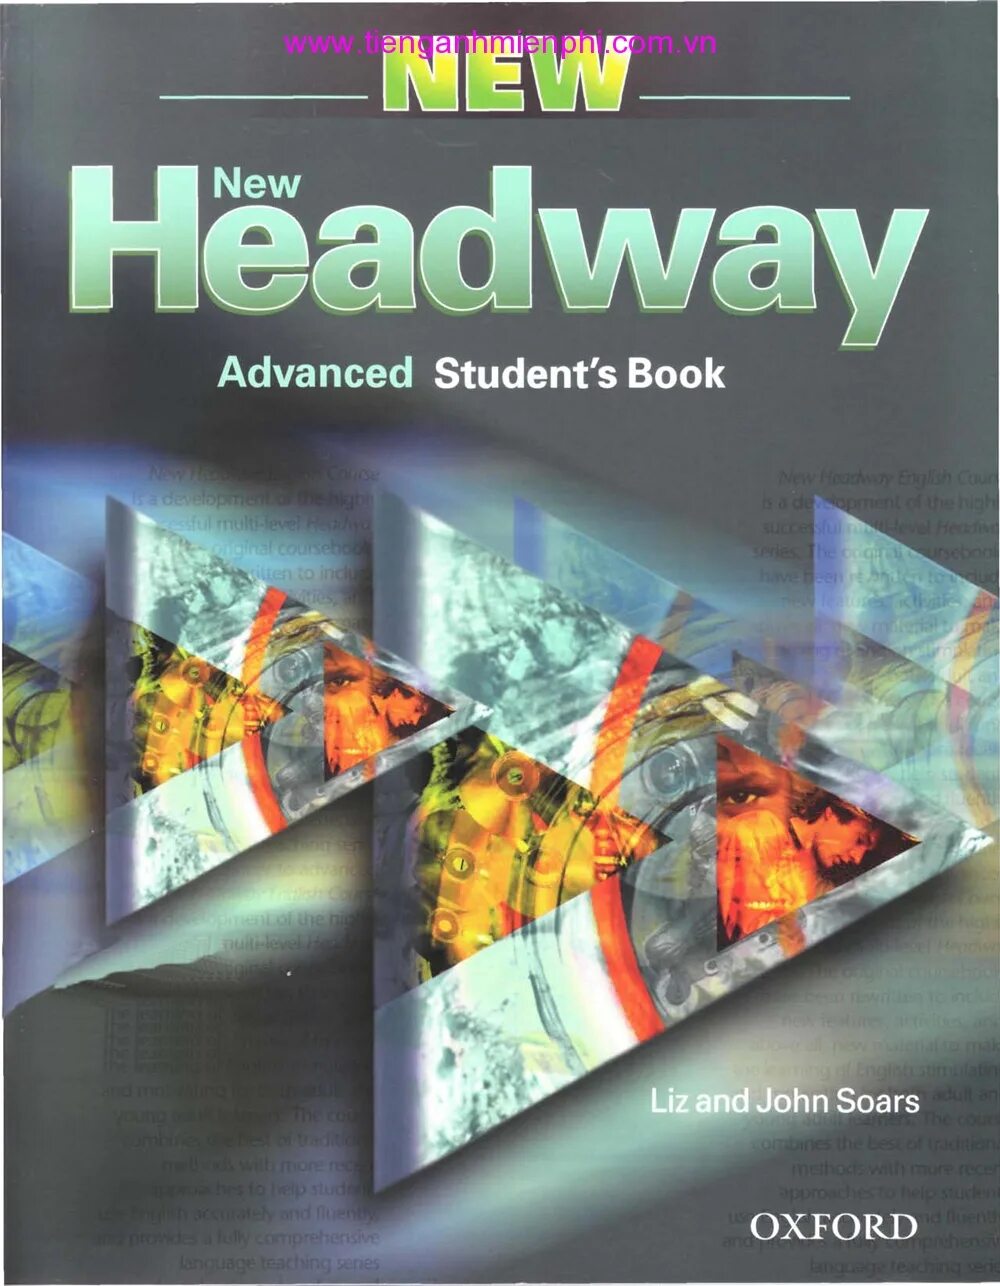 Английская книга Headway. New Headway English course student's book. Headway student's book книга. New Headway Advanced.